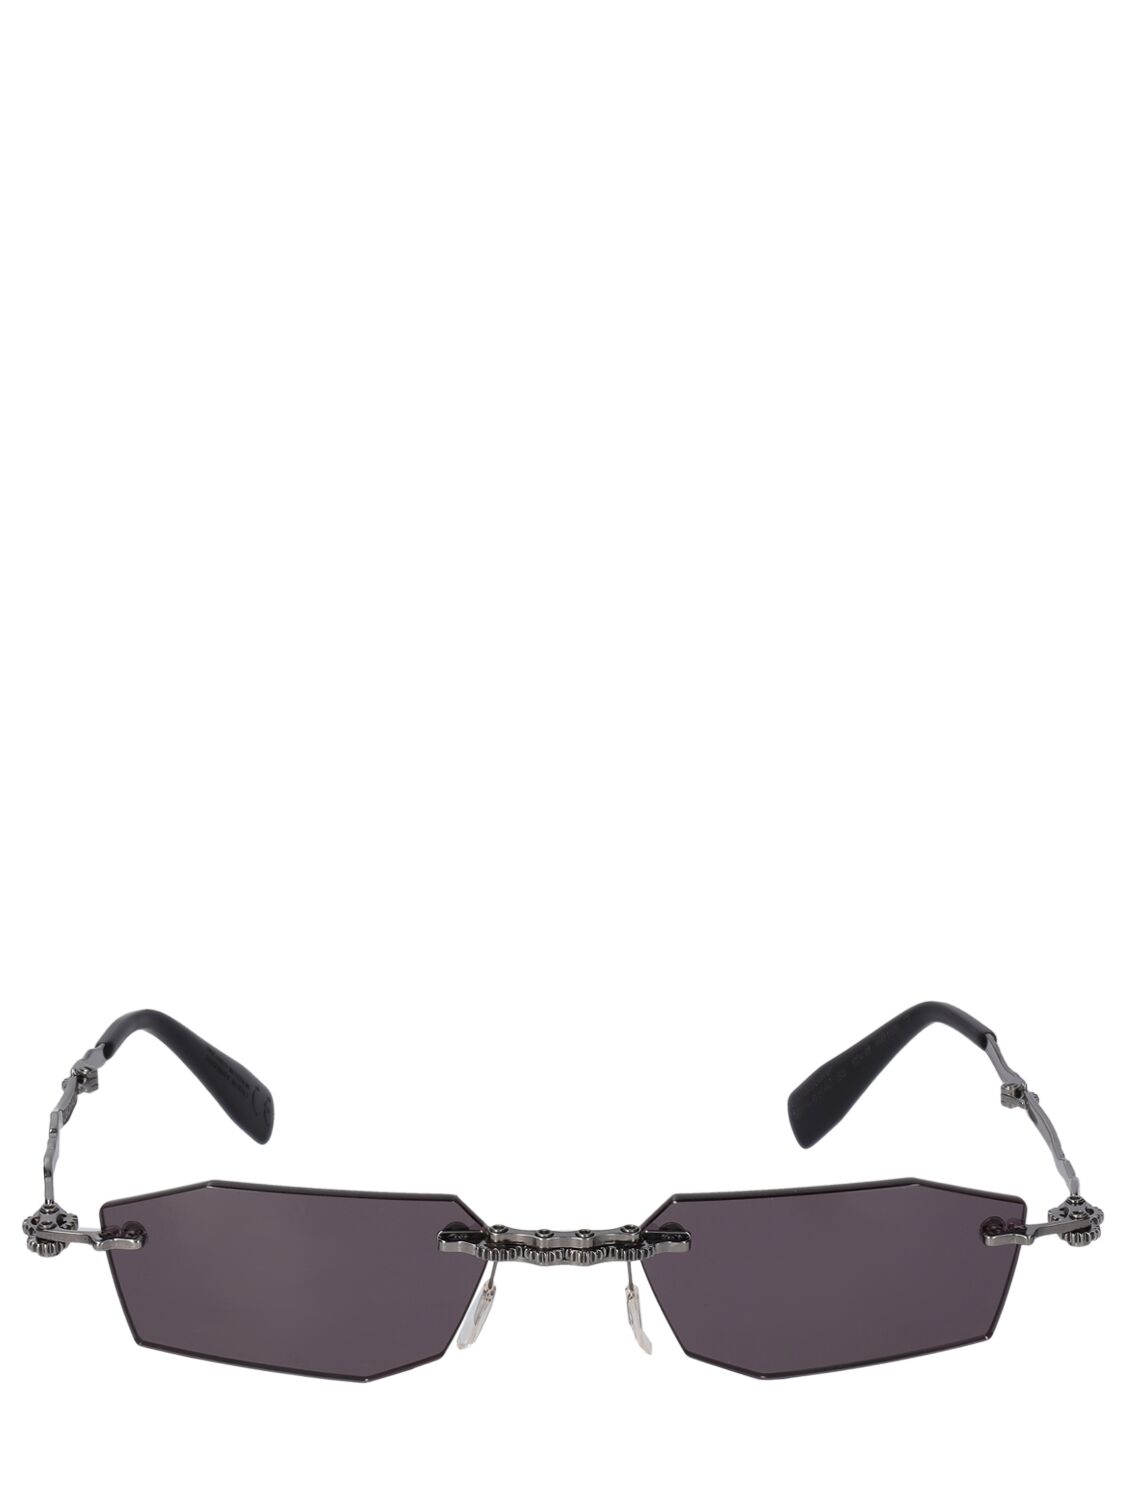 Image of H40 Metal Machinery Rimless Sunglasses